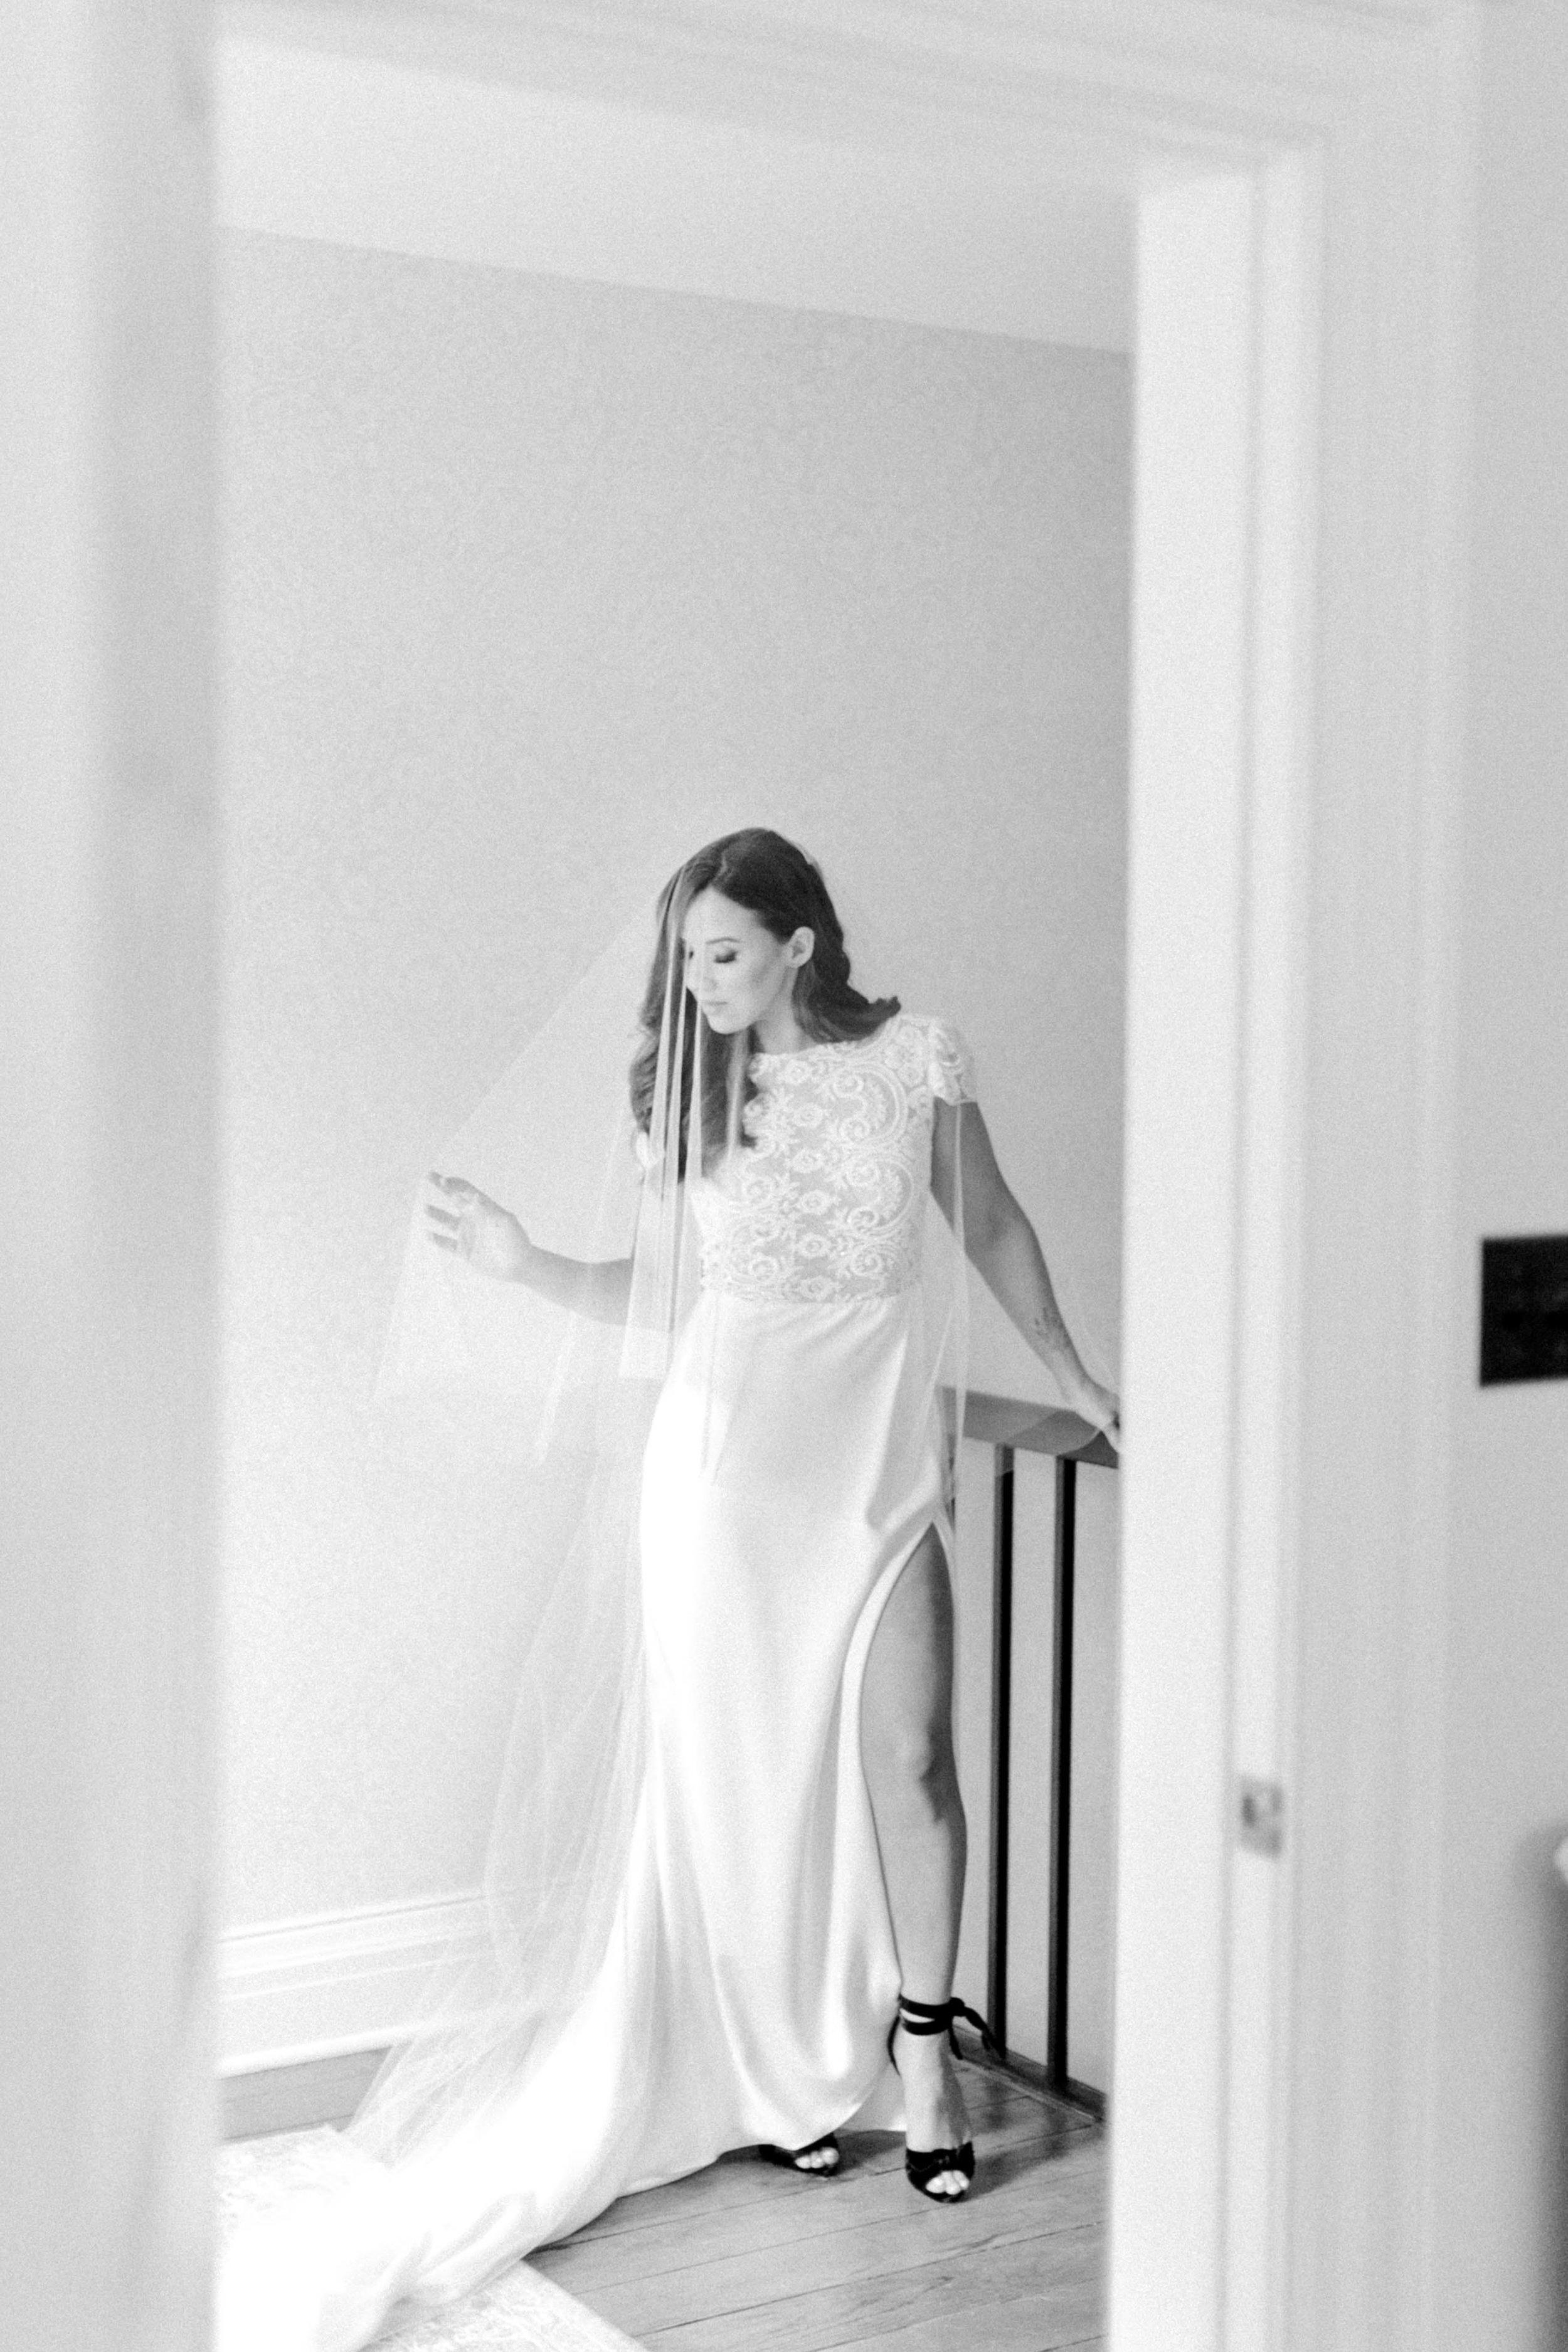 kurtz-gracewood-wedding-soft-airy-photographer-white-book-danielle-carmen-2.jpg